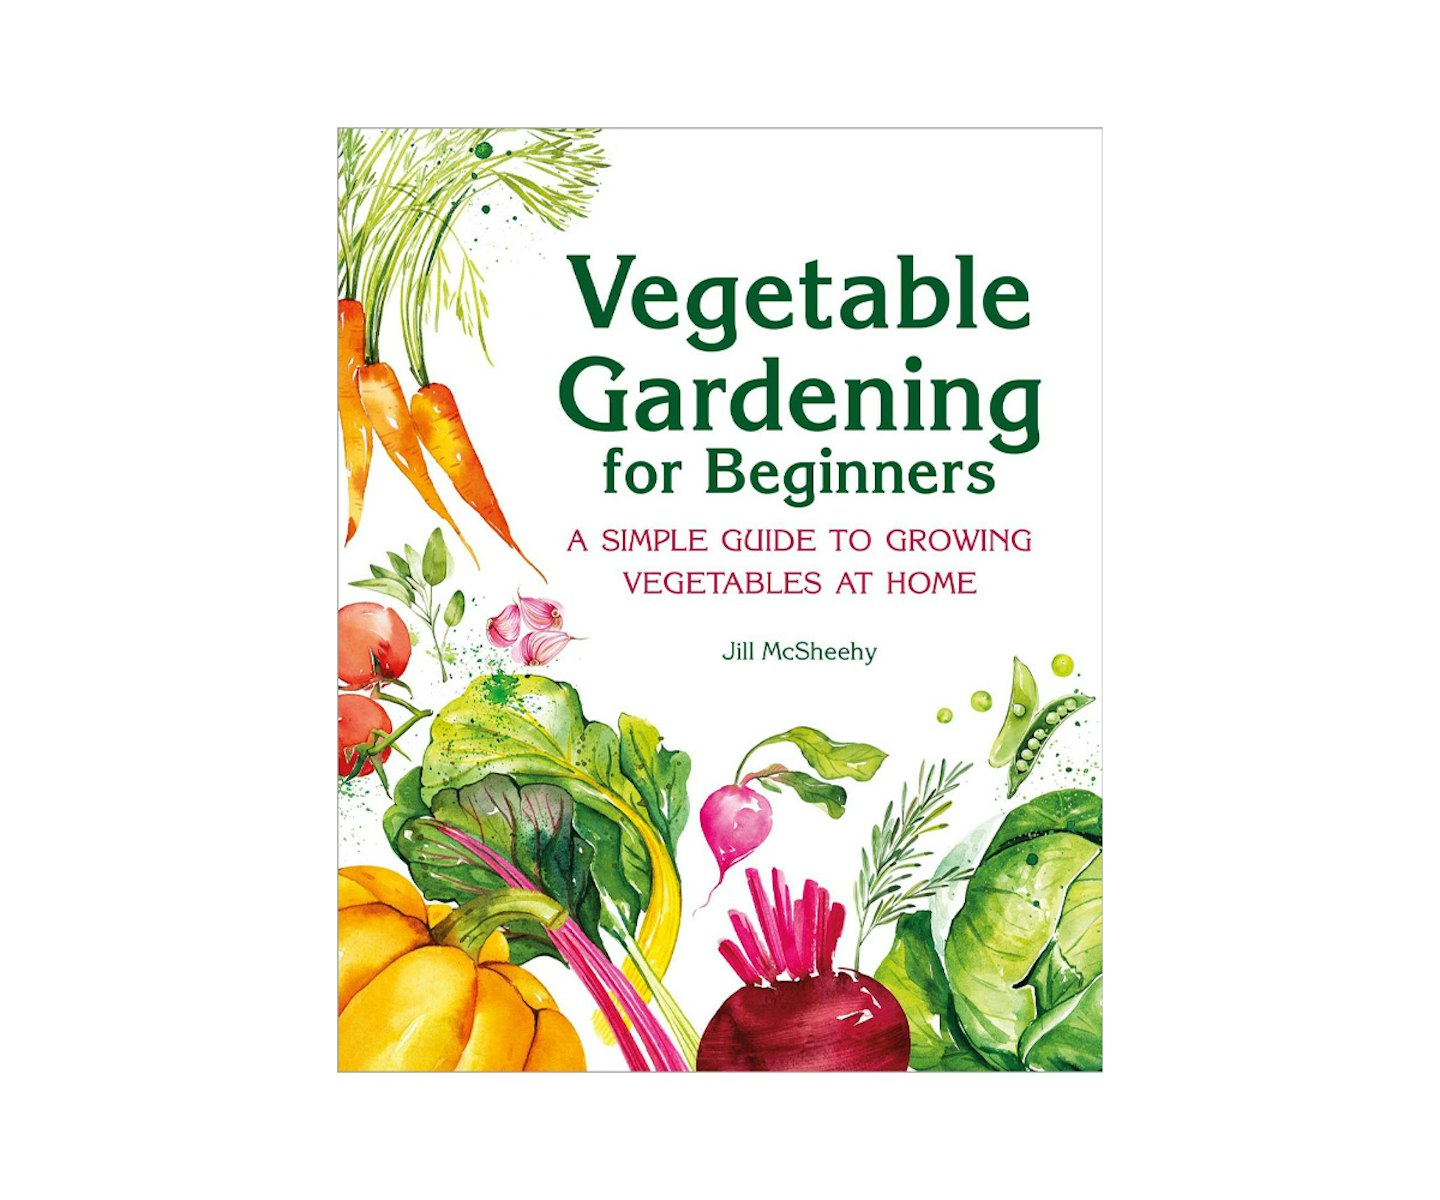 Veg garden book